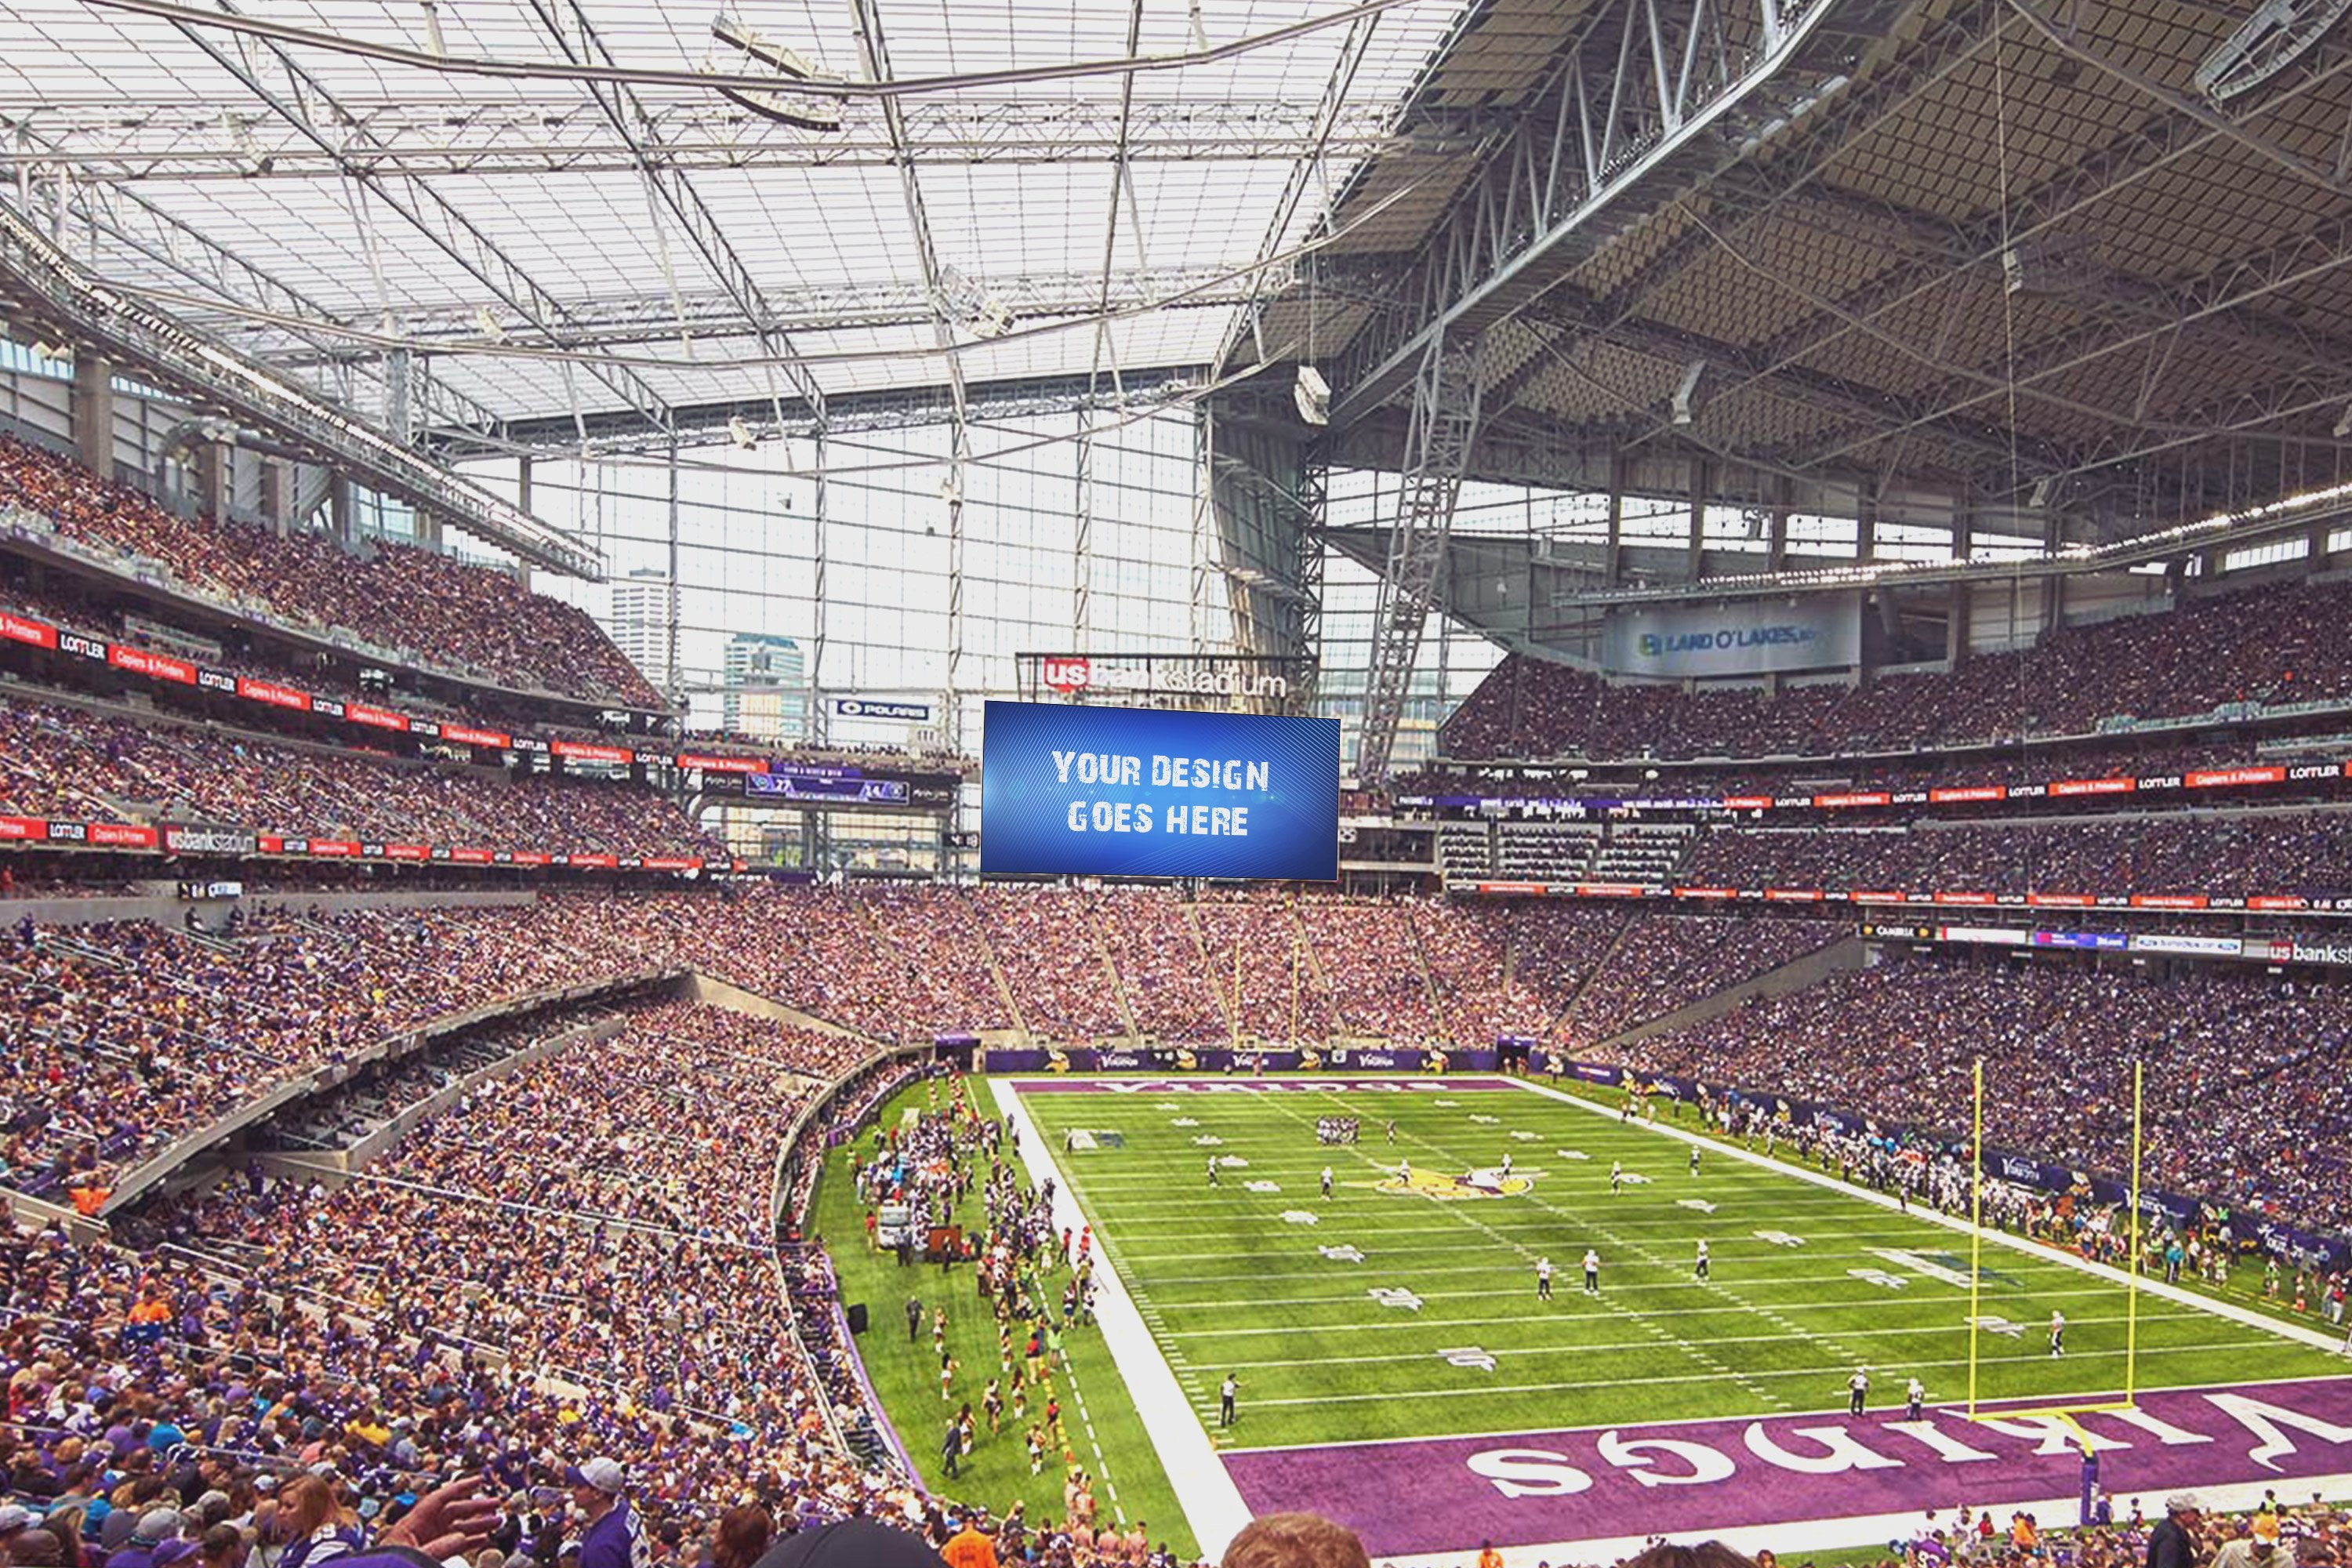 NFL Stadium Screen Mock-up #3 cover image.